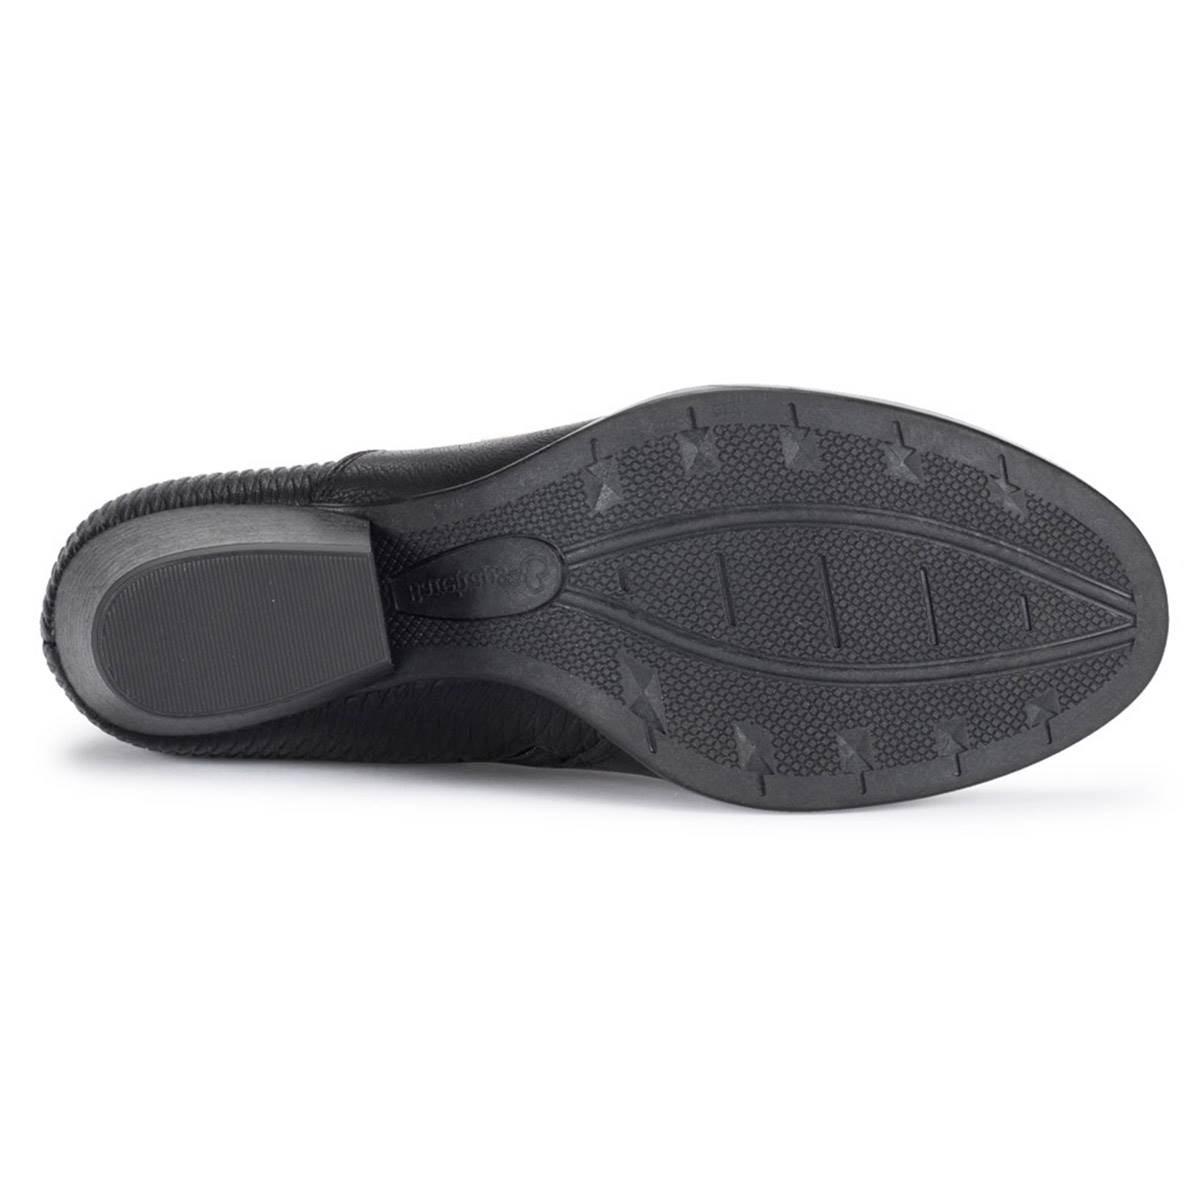 Baretraps Reggie Womens Block Heel Ankle Boots Brown Product Image